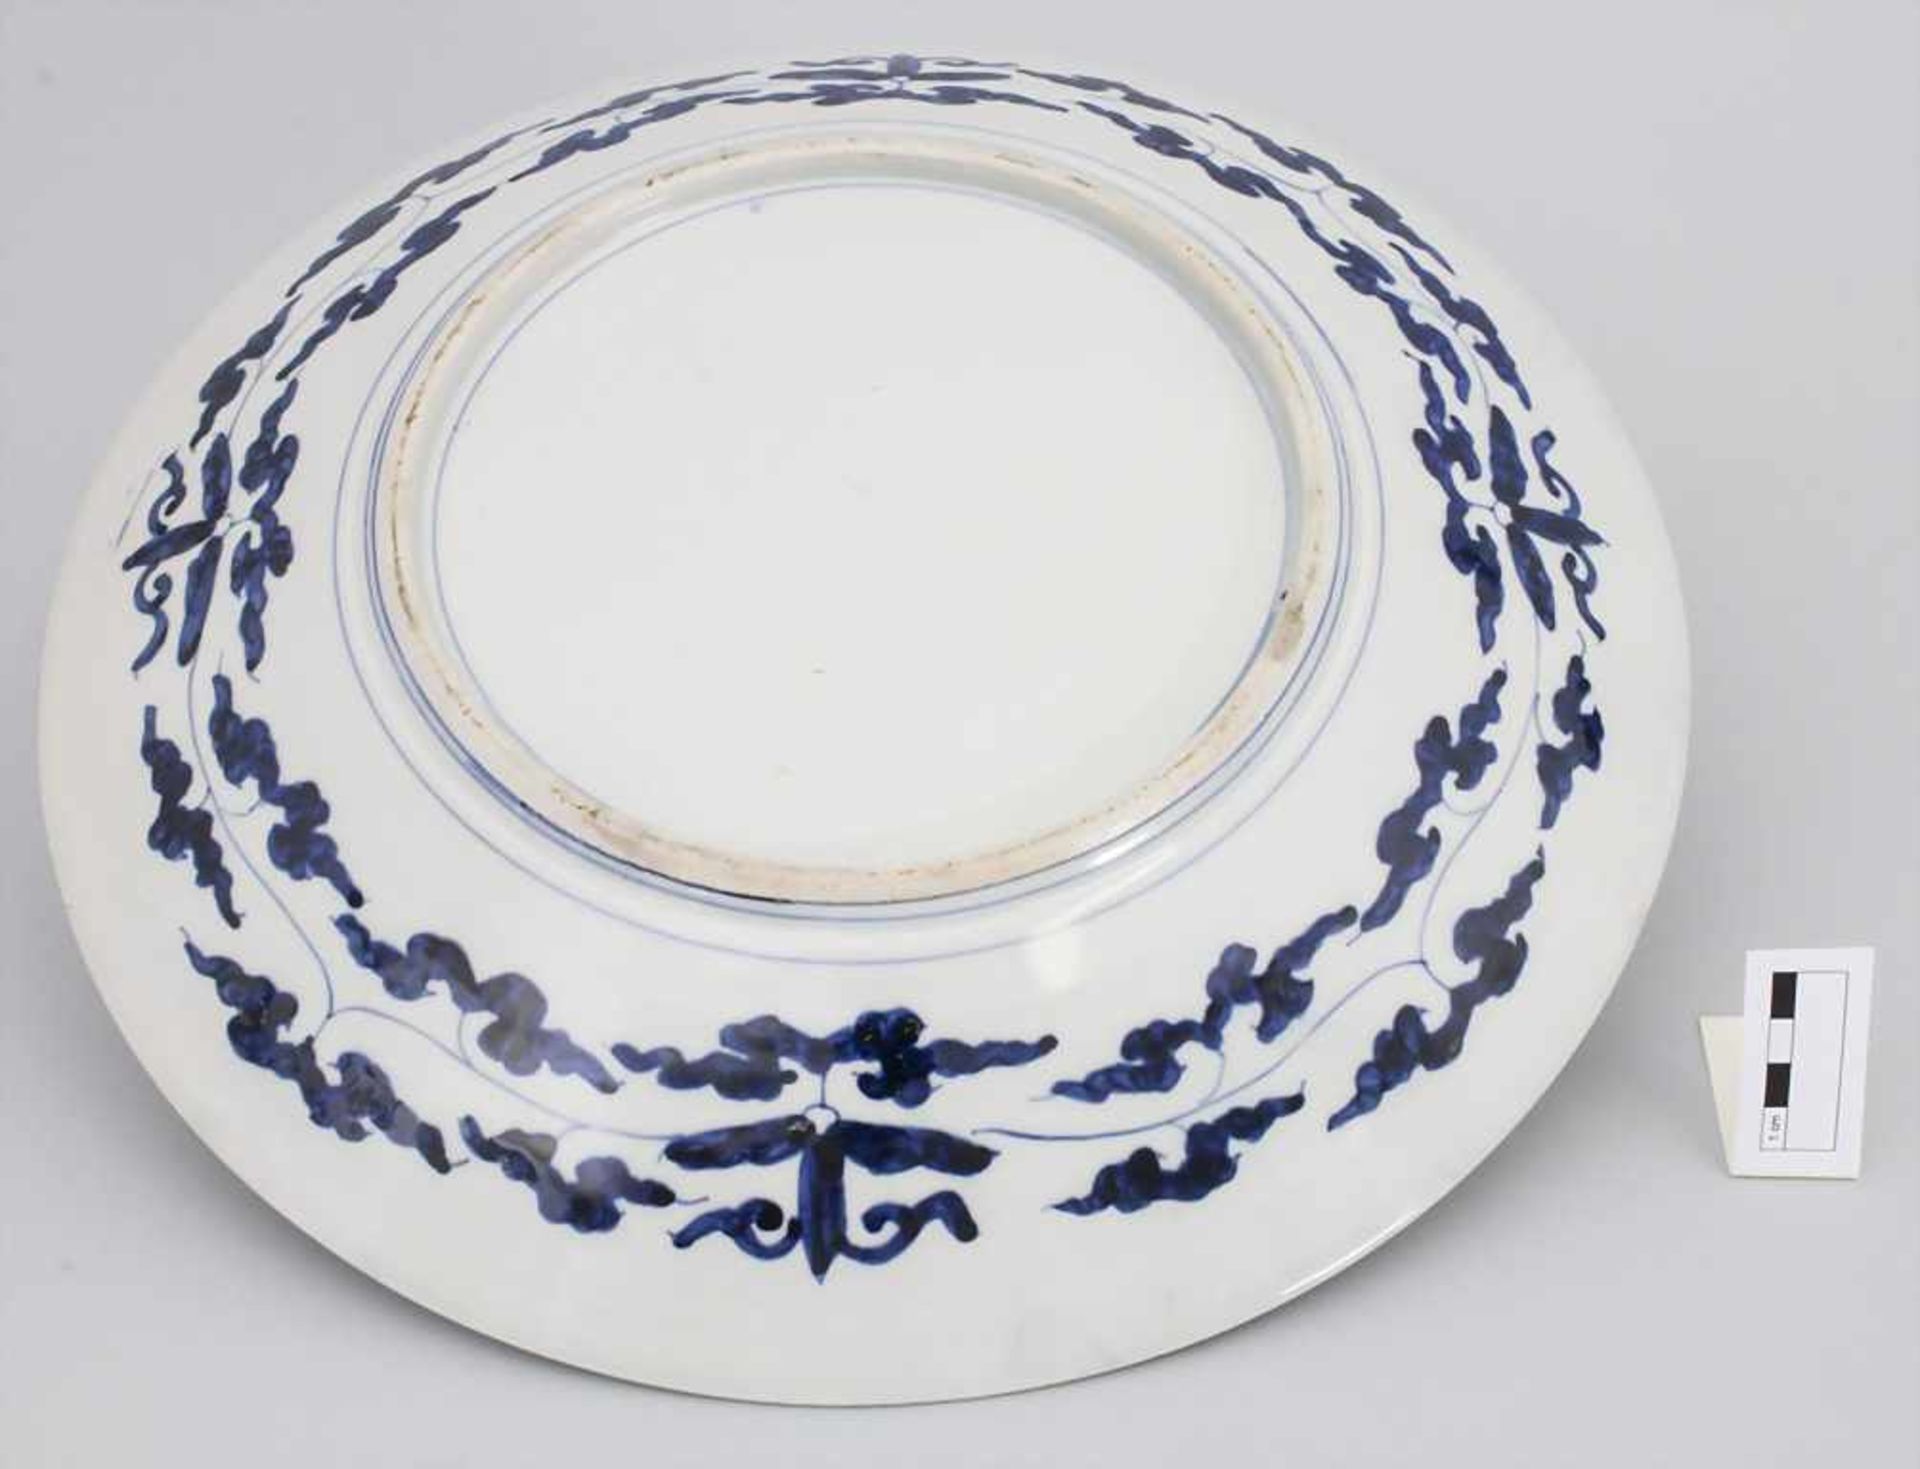 Wandteller mit Imaridekor / A wall plate with Imari patterns, China, um 1900 - Image 3 of 5